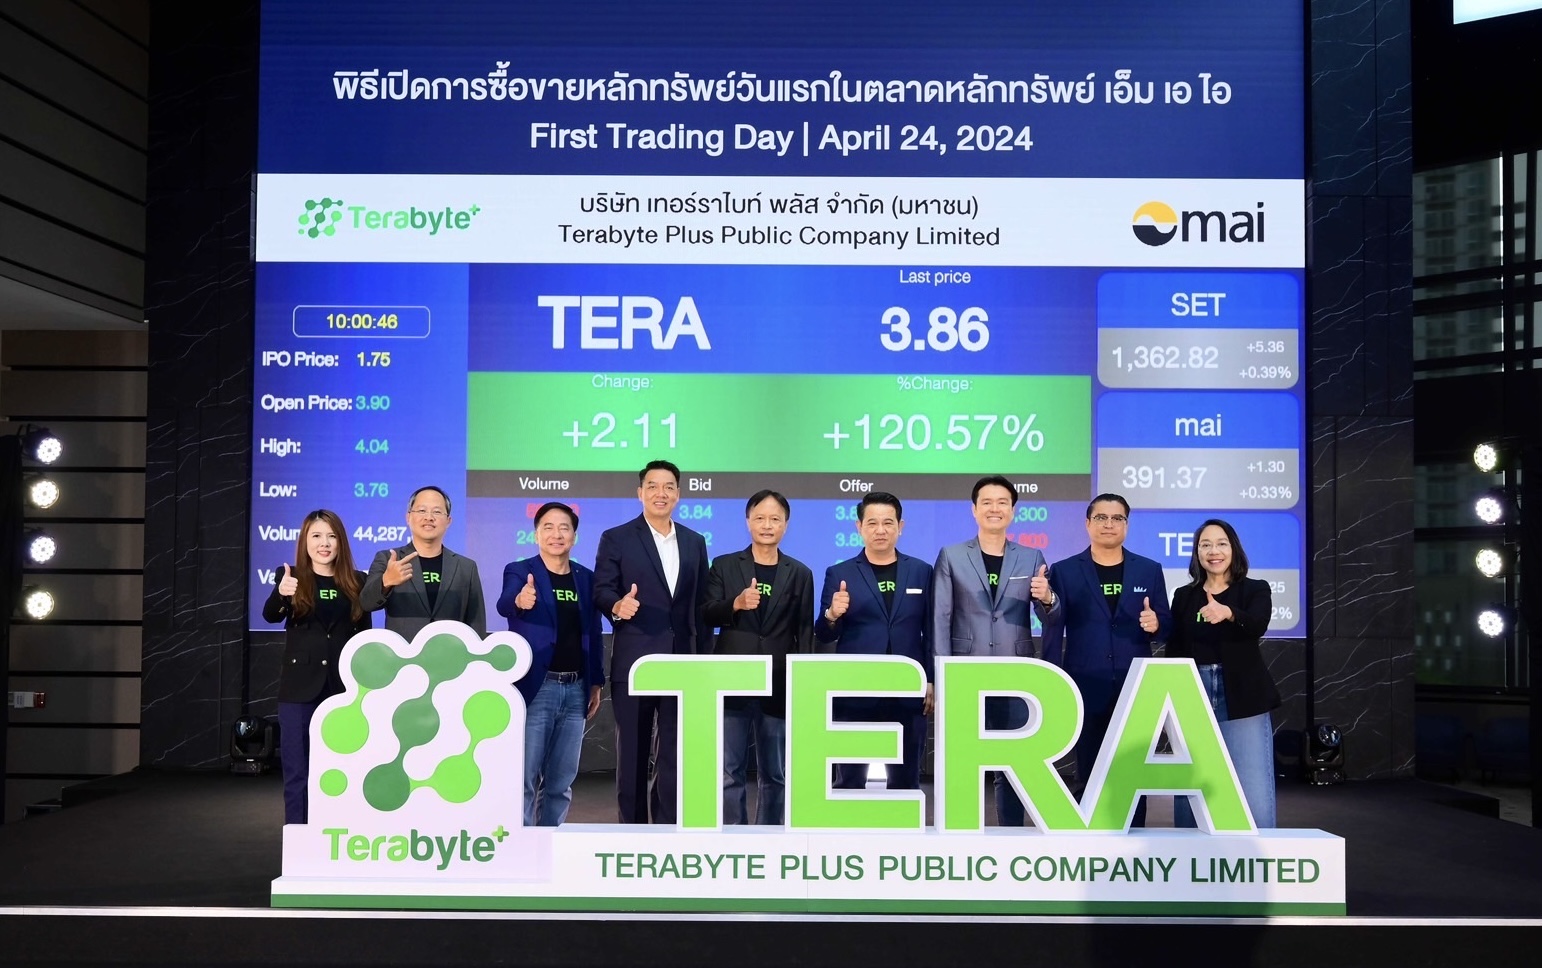 “TERA” ฟอร์มเจ๋ง! เปิดเทรดวันแรกเหนือจอง 122.86%ลุยให้บริการ T.Cloud รับอนาคตธุรกิจคึกคักปักหมุดผลงาน 3 ปี เติบโตเฉลี่ยเกิน 10%